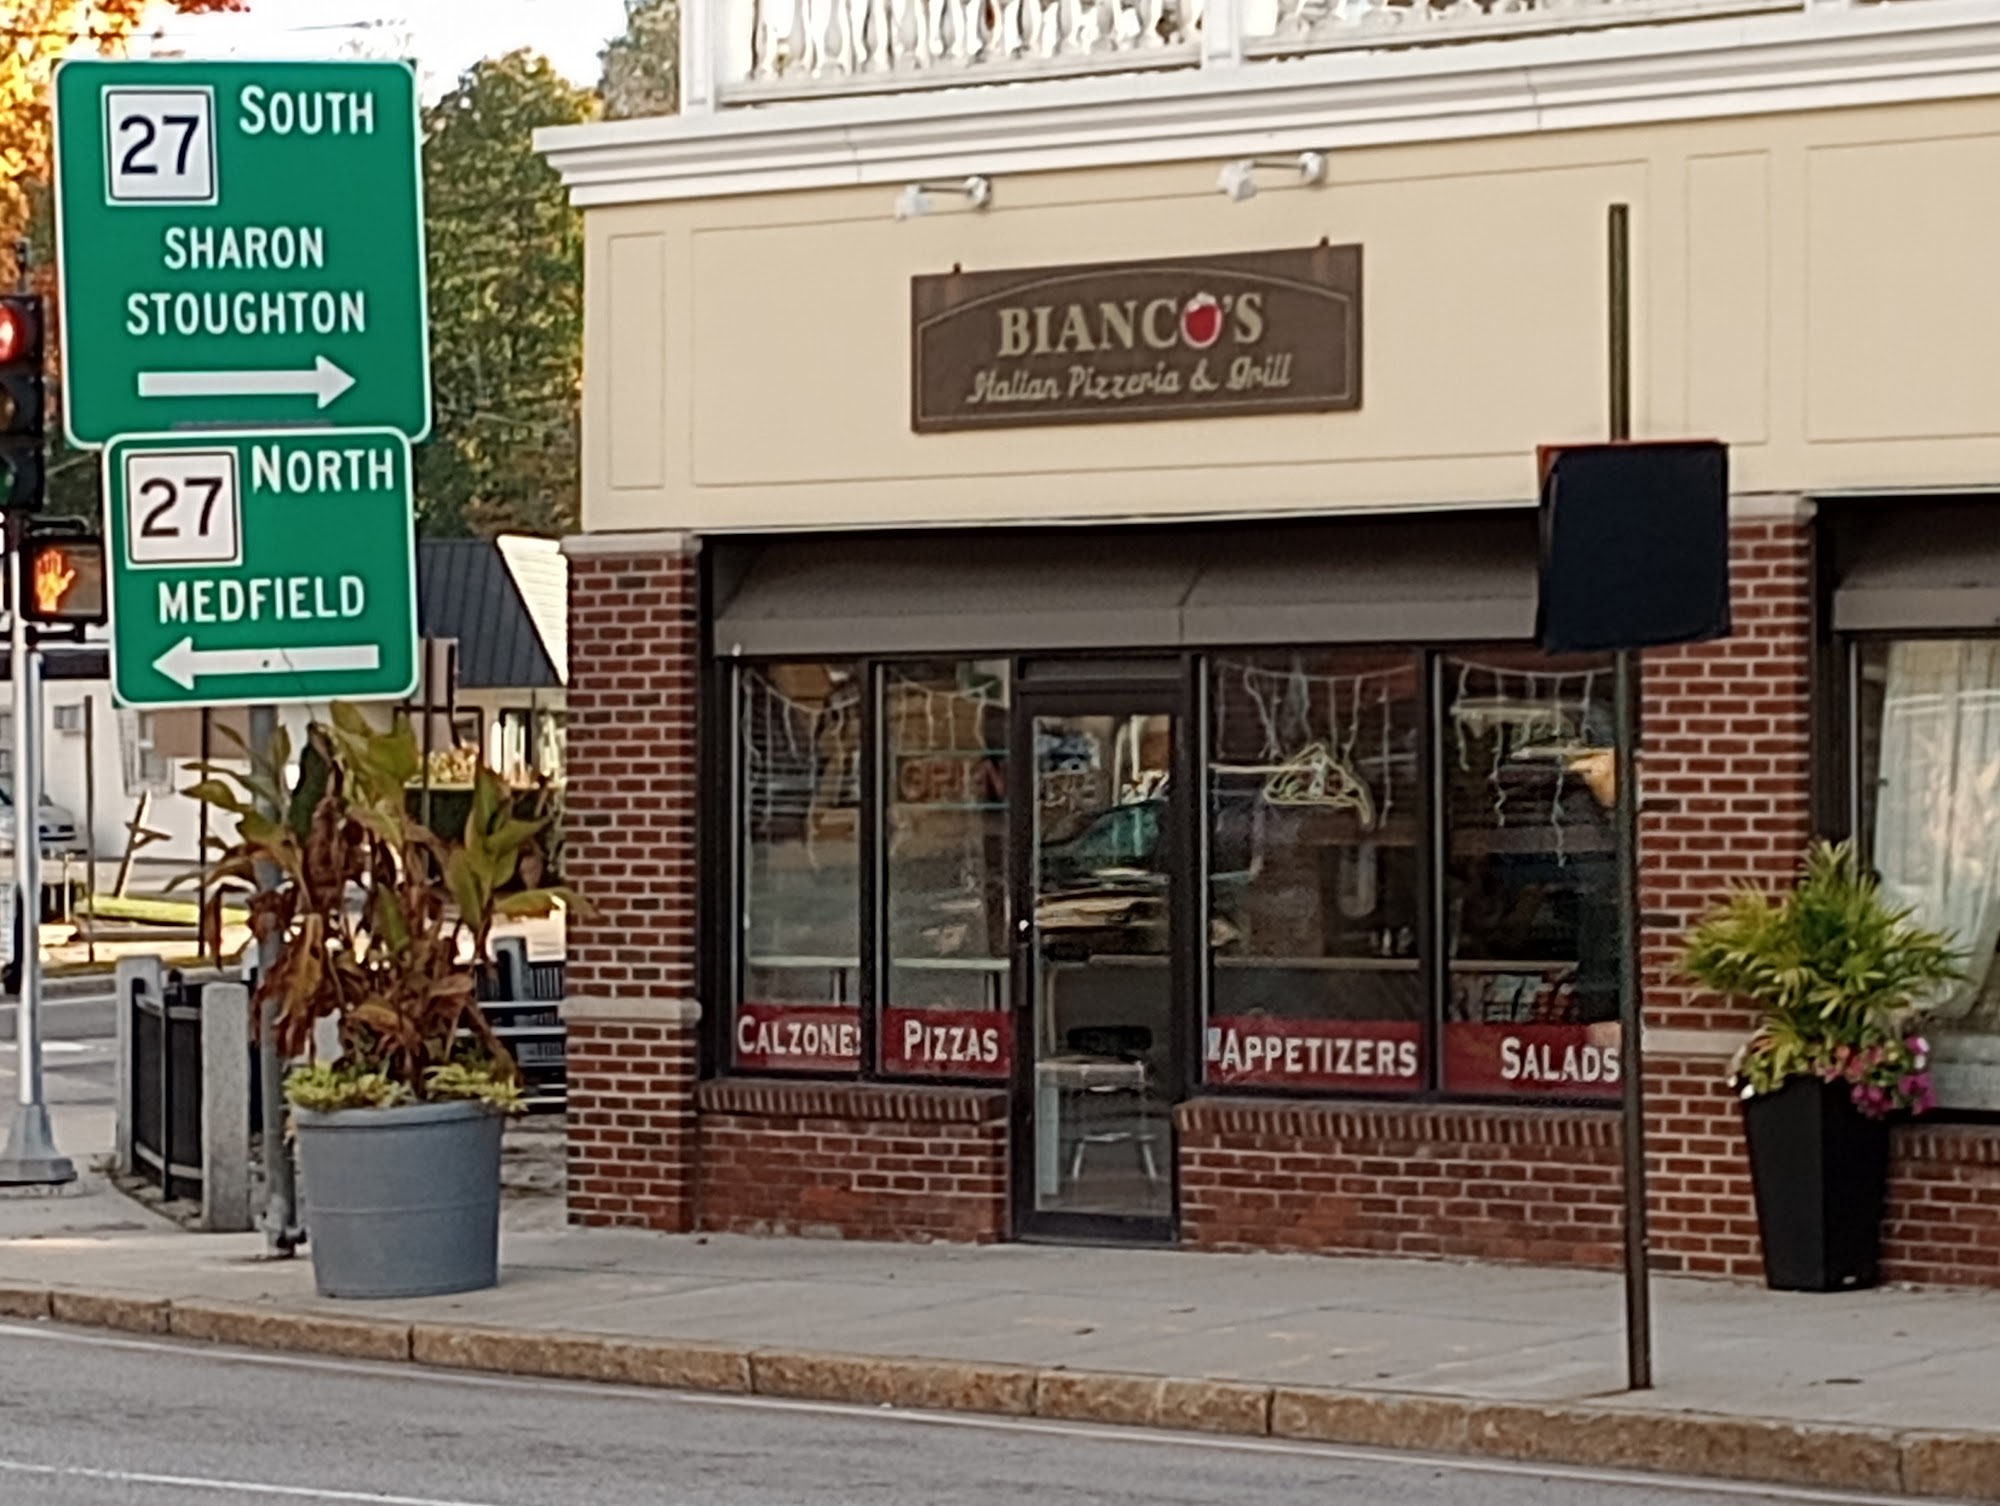 Bianco's Italian Pizzeria and Grill